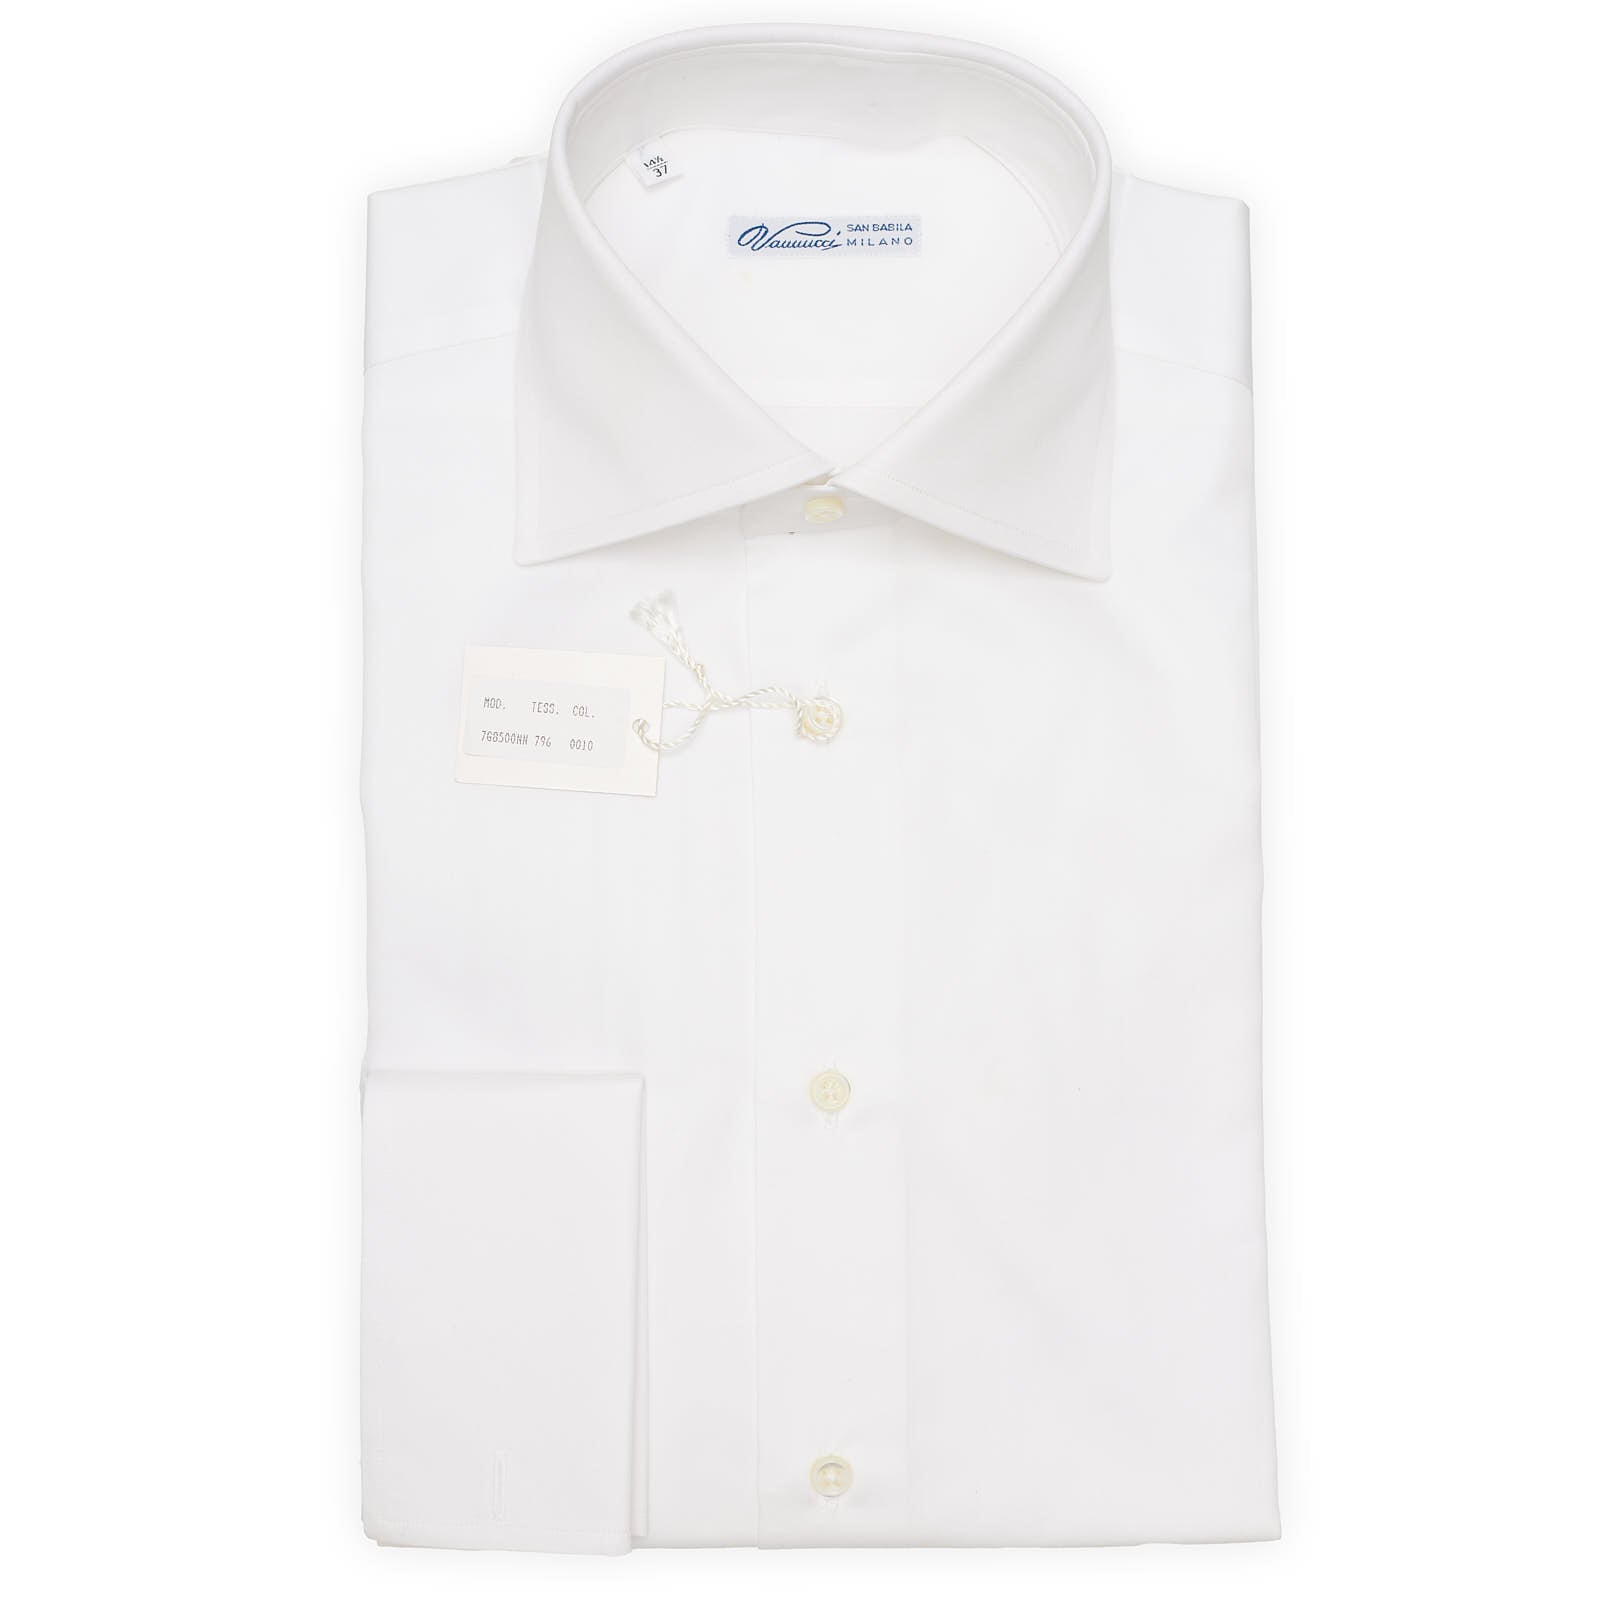 VANNUCCI Milano White Cotton French Cuff Dress Shirt NEW